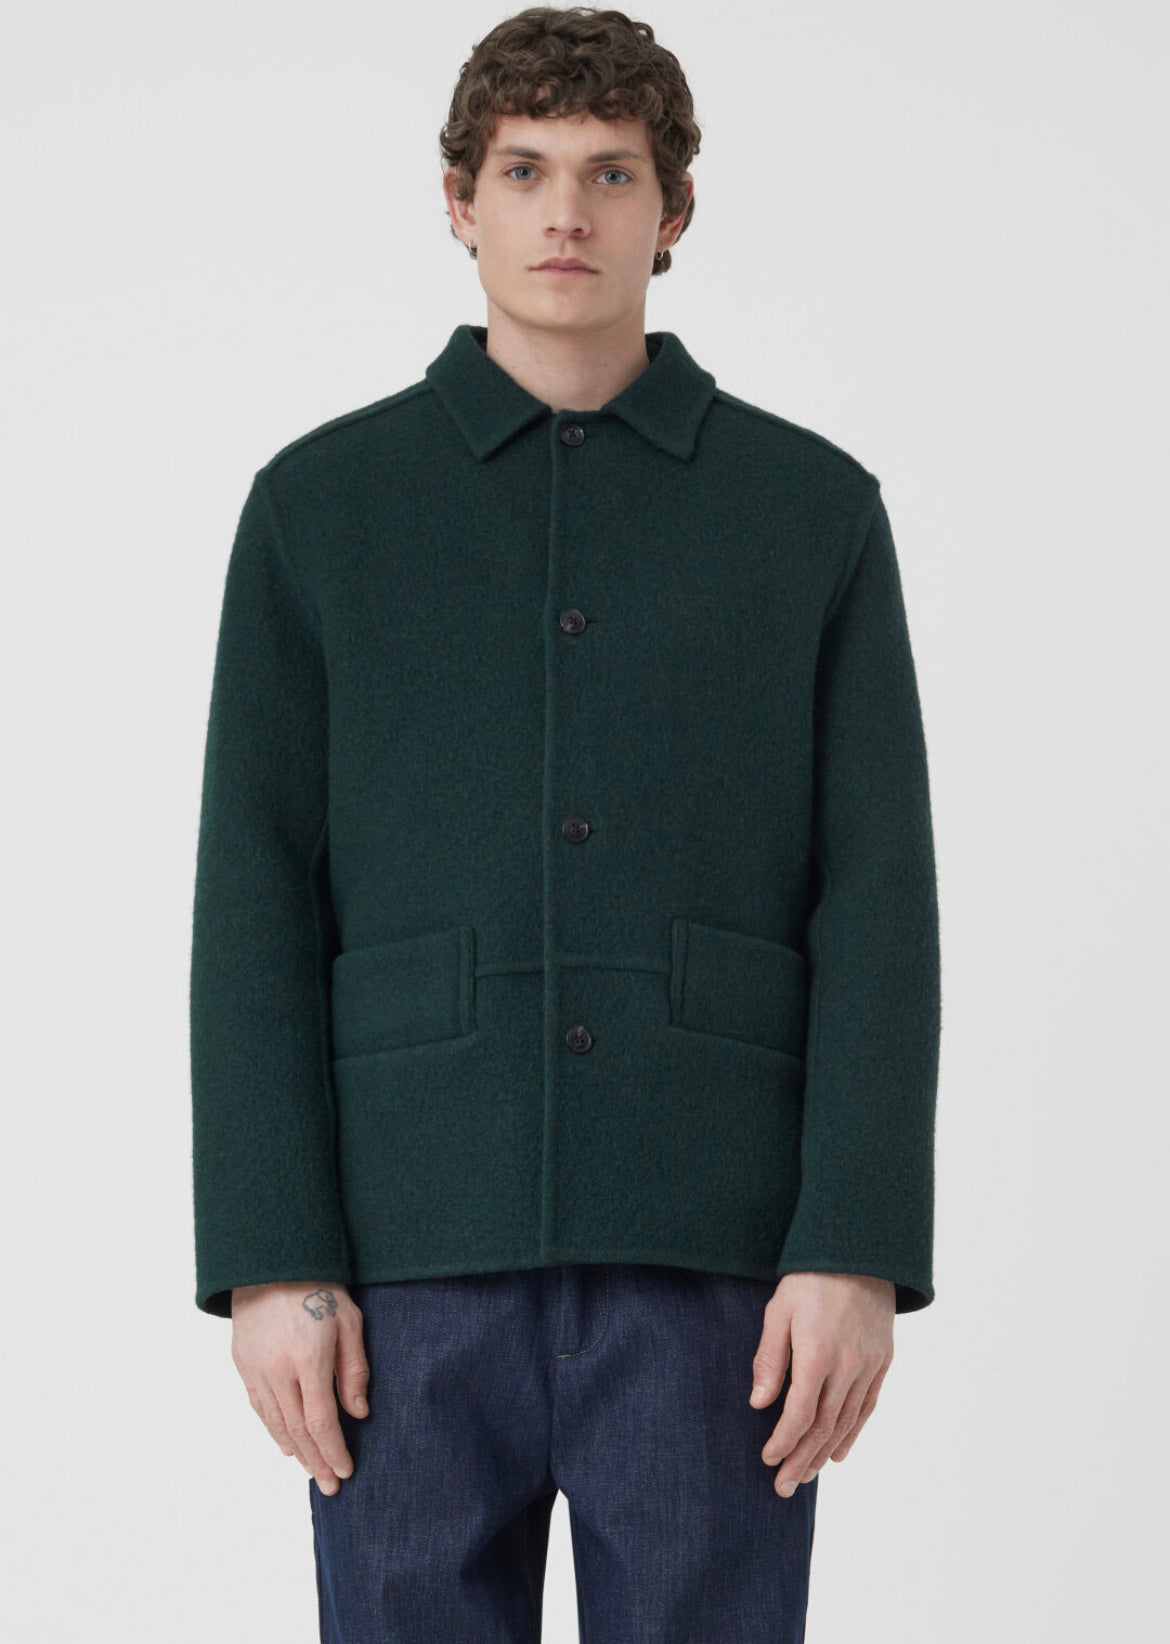 CLOSED Mens Wool Mix Jacket in Fern Green